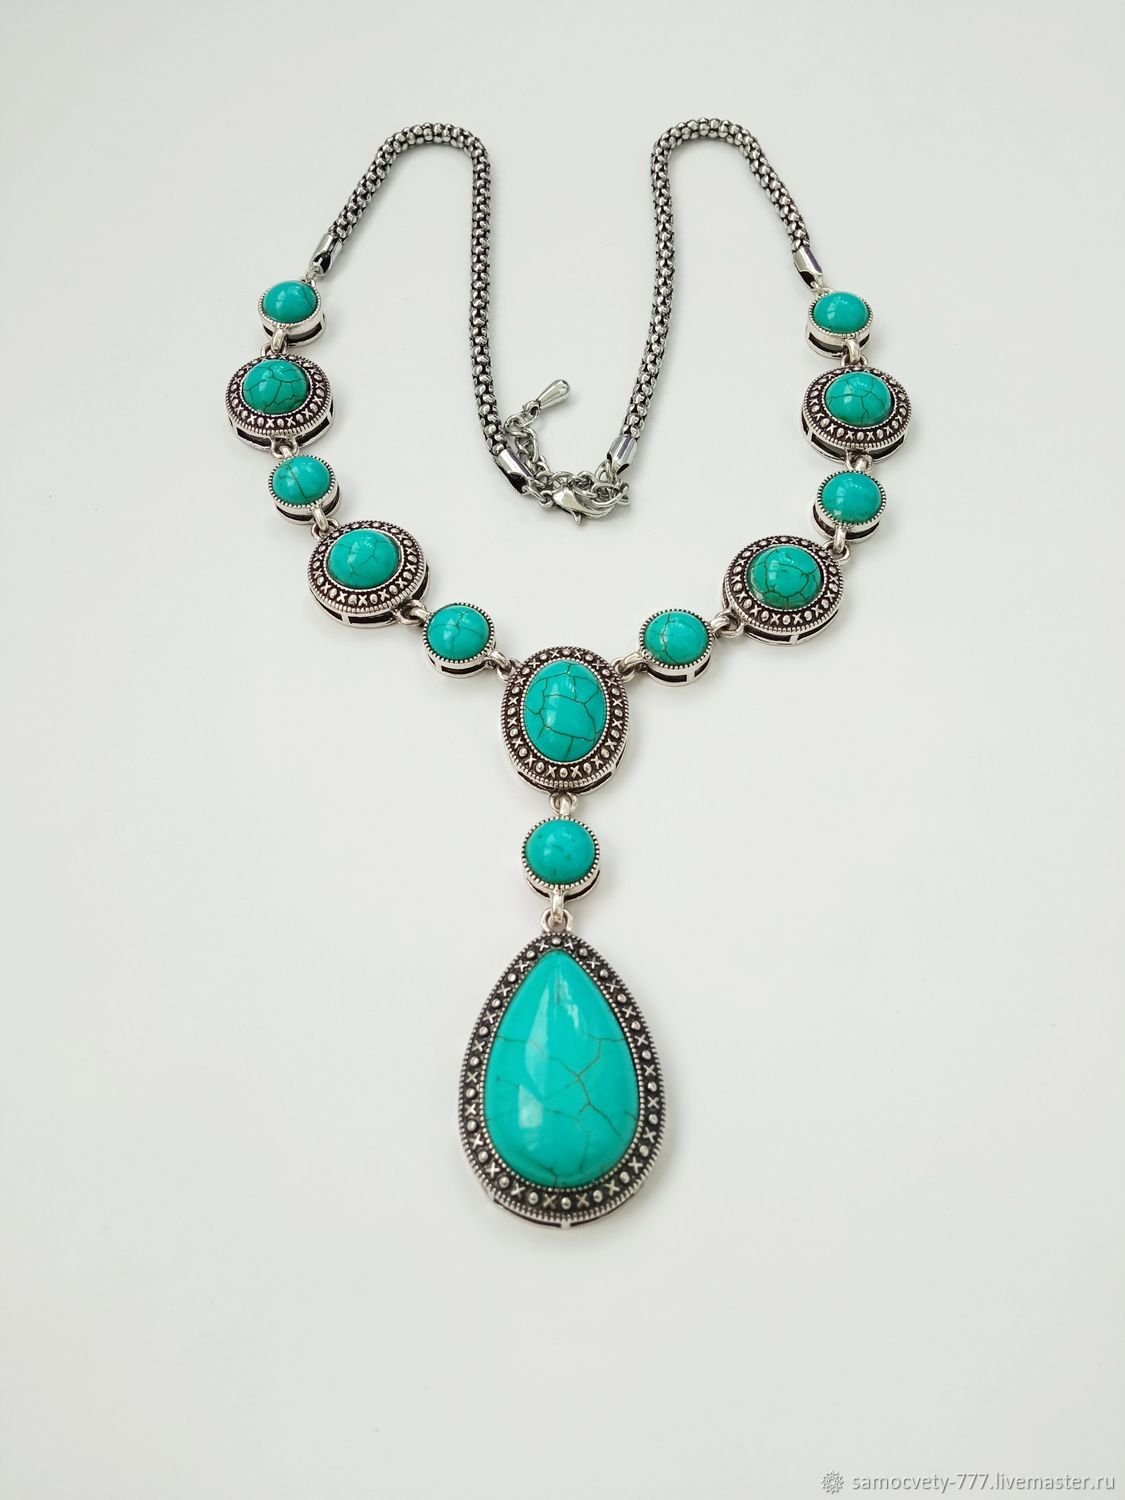 Lia sophia turquoise necklace